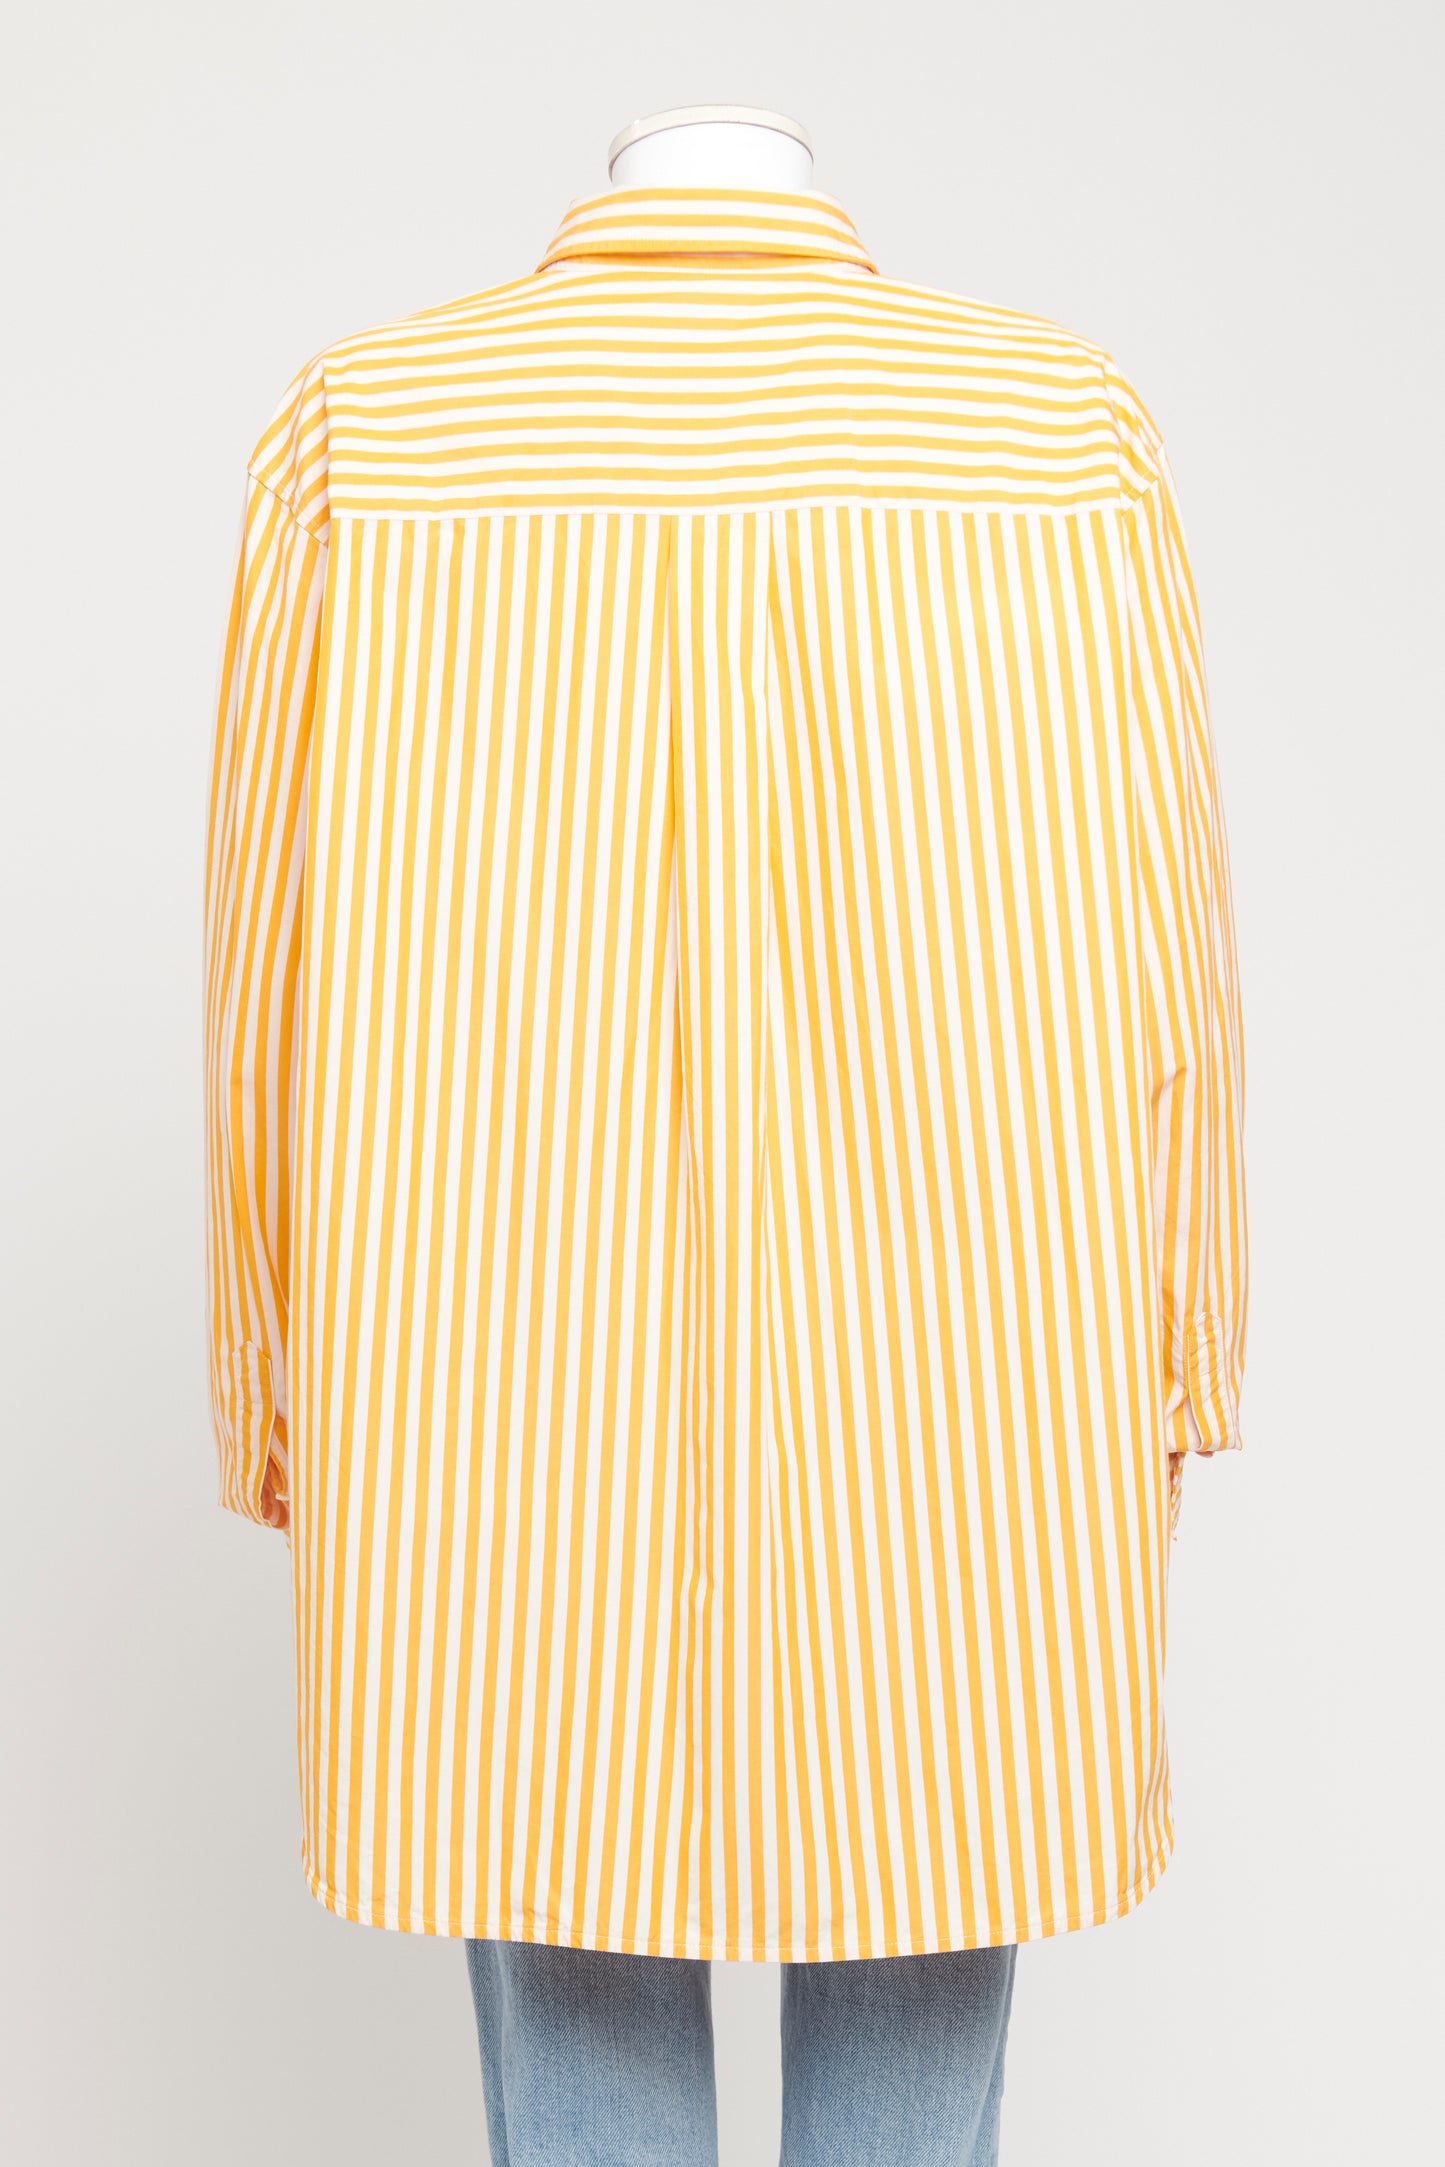 Orange And White Preowned Signature Striped Shirt